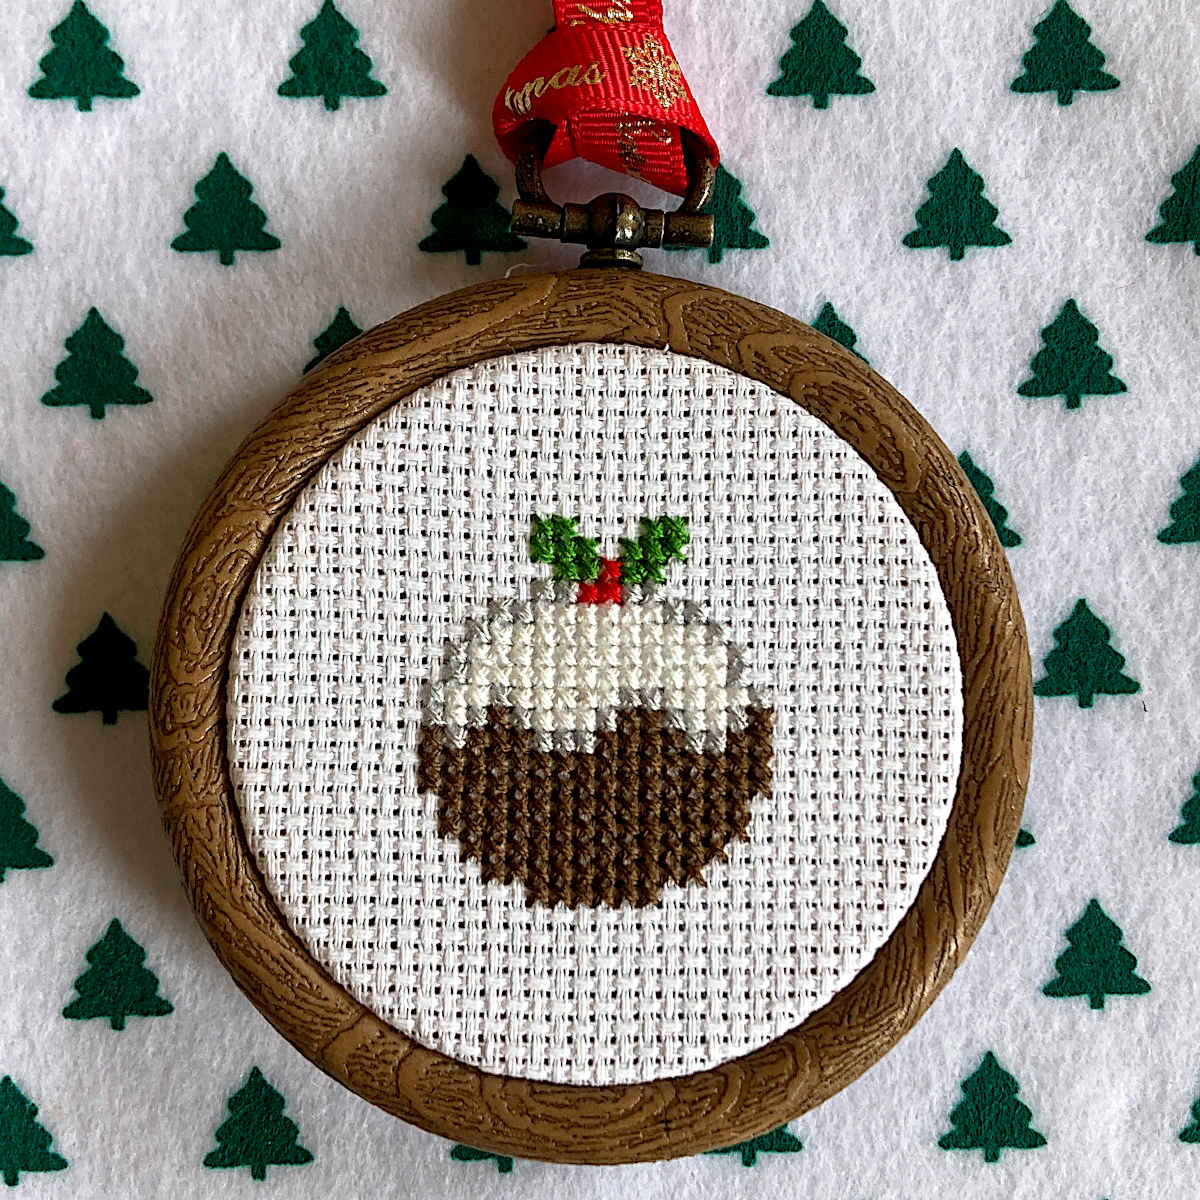 Cross stitch Christmas ornament of a British Christmas Pudding